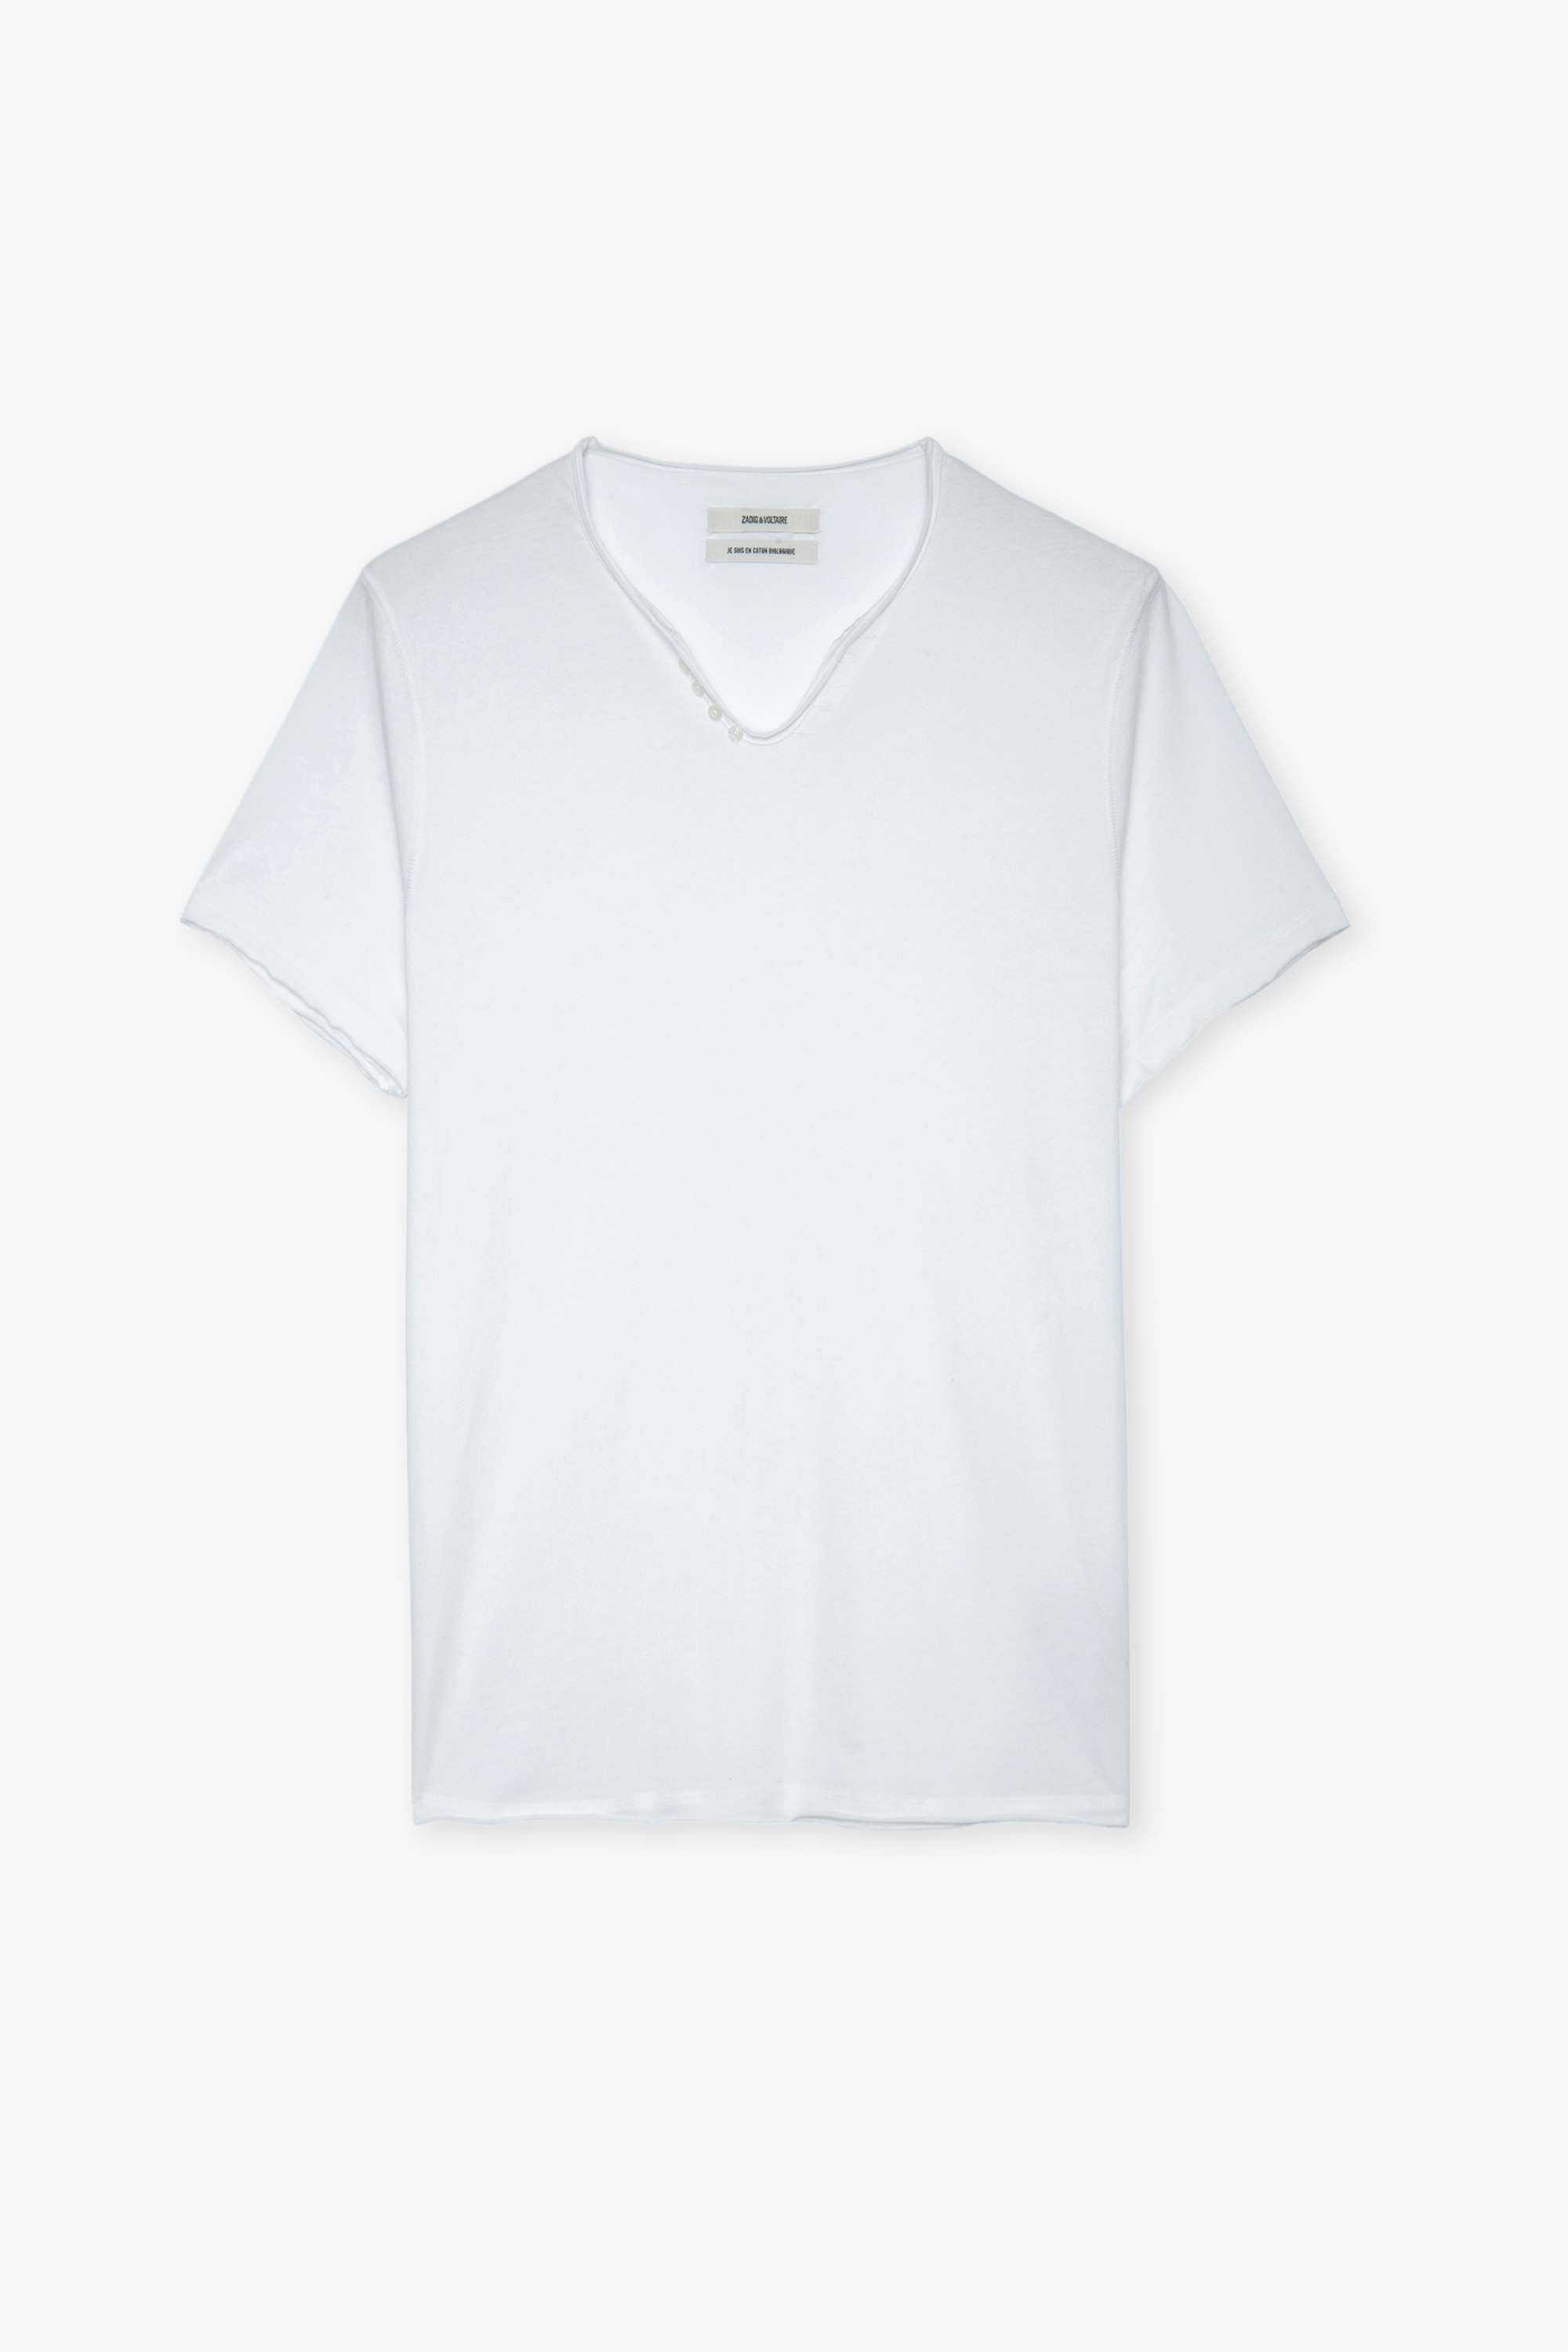 Monastir T-shirt Men’s white T-shirt